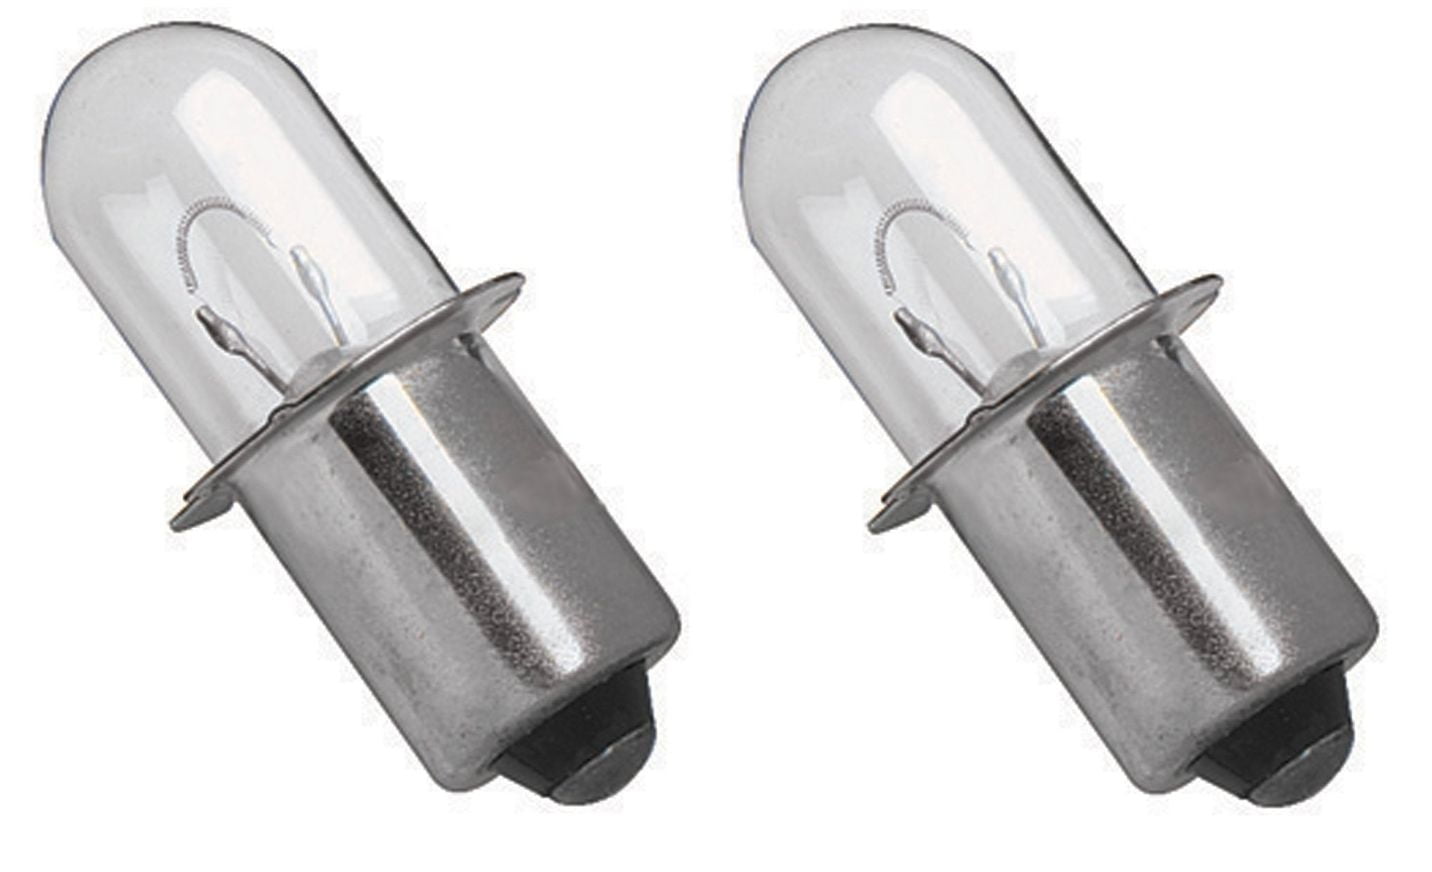 Light Bulb Craftsman 18v Volt Flashlight Replacement Xenon Bulb/Replaces 981258.001 Get 2 MG019 